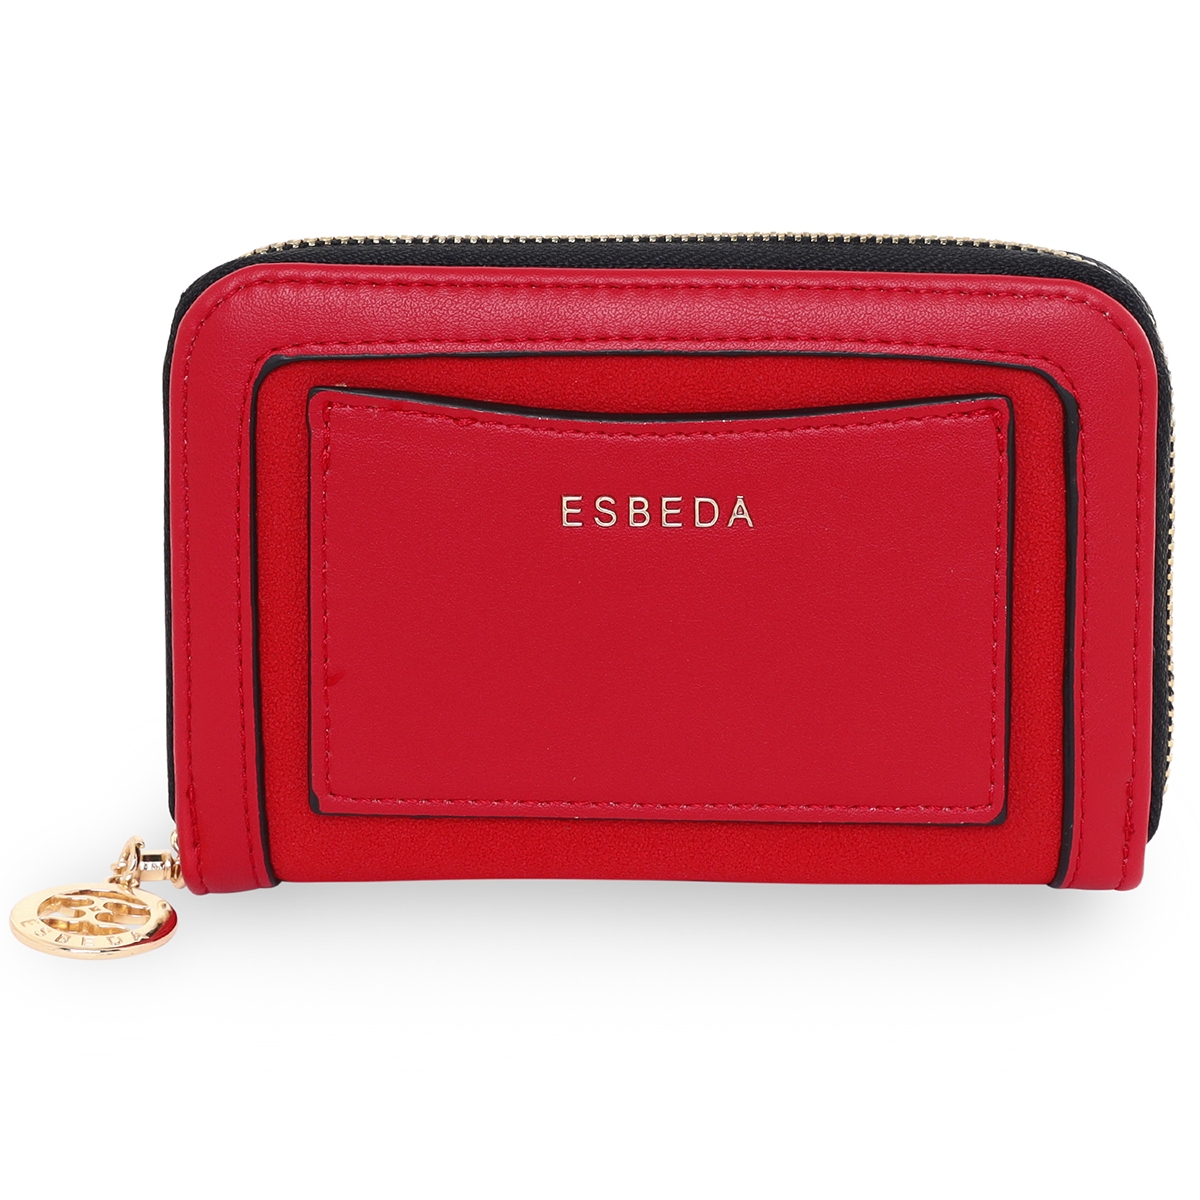 ESBEDA | ESBEDA Red Color Soft Suede Wallet For Women's- Small 0